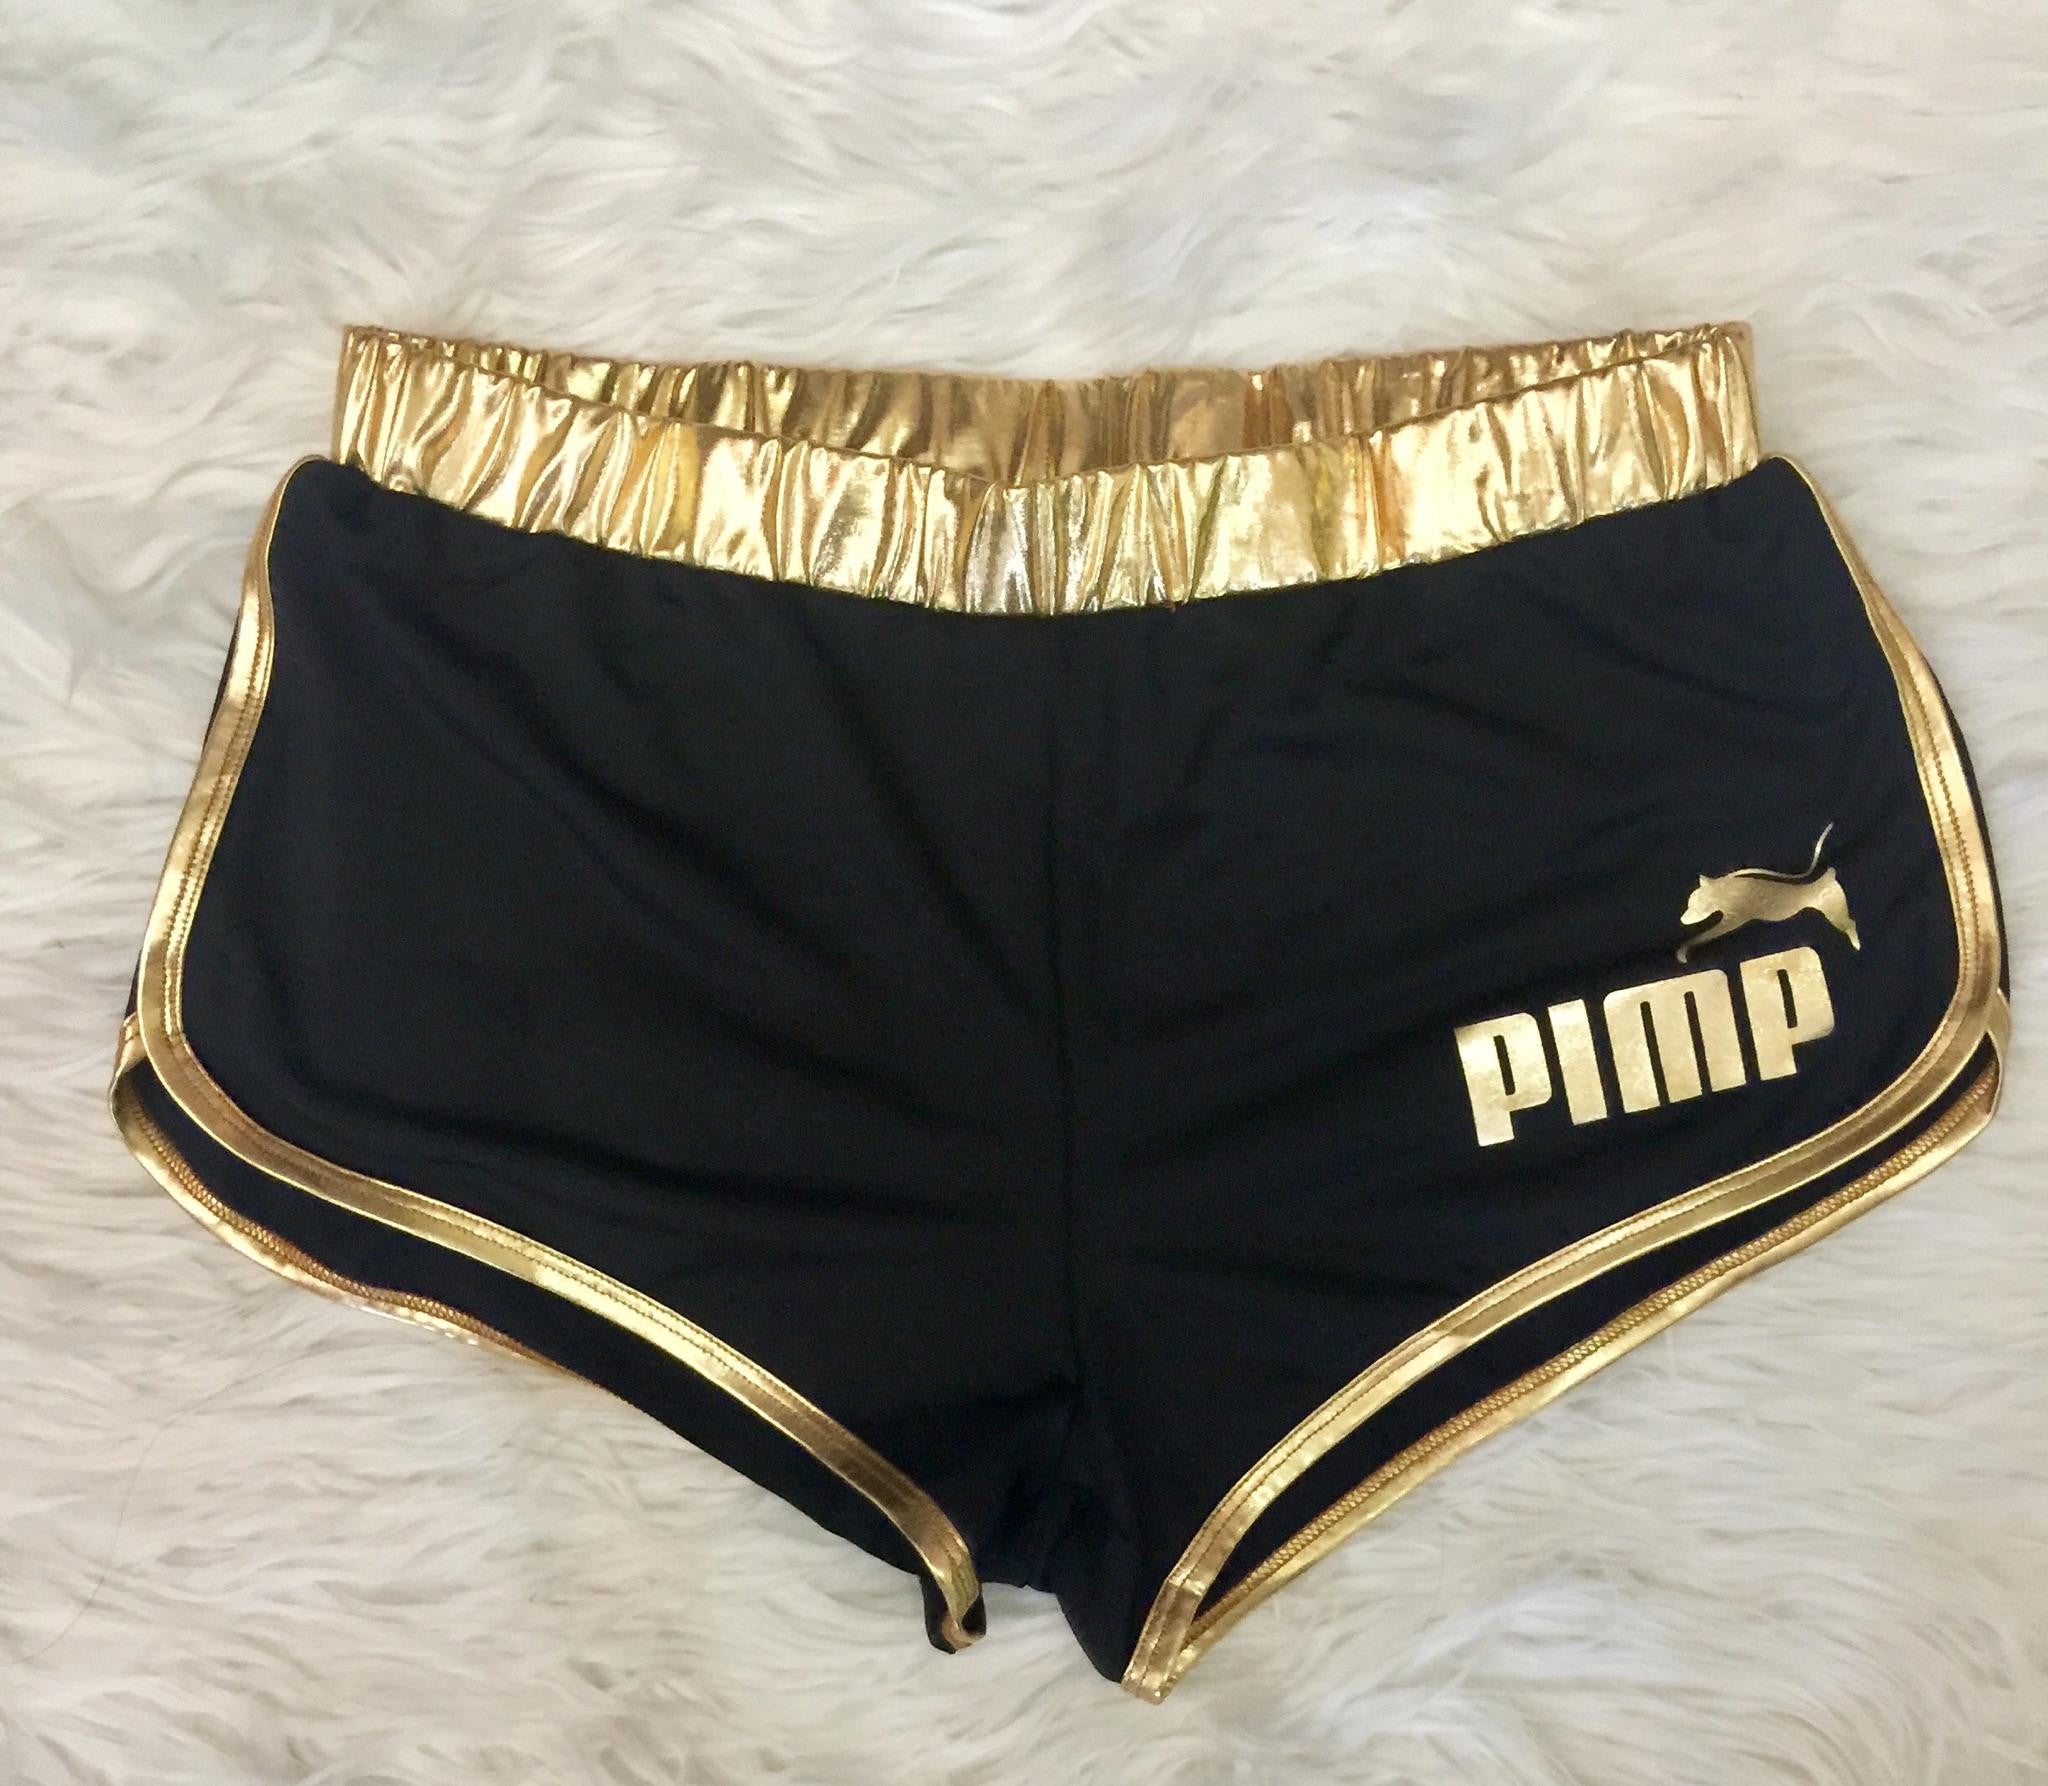 Limited Edition PIMP Shorts